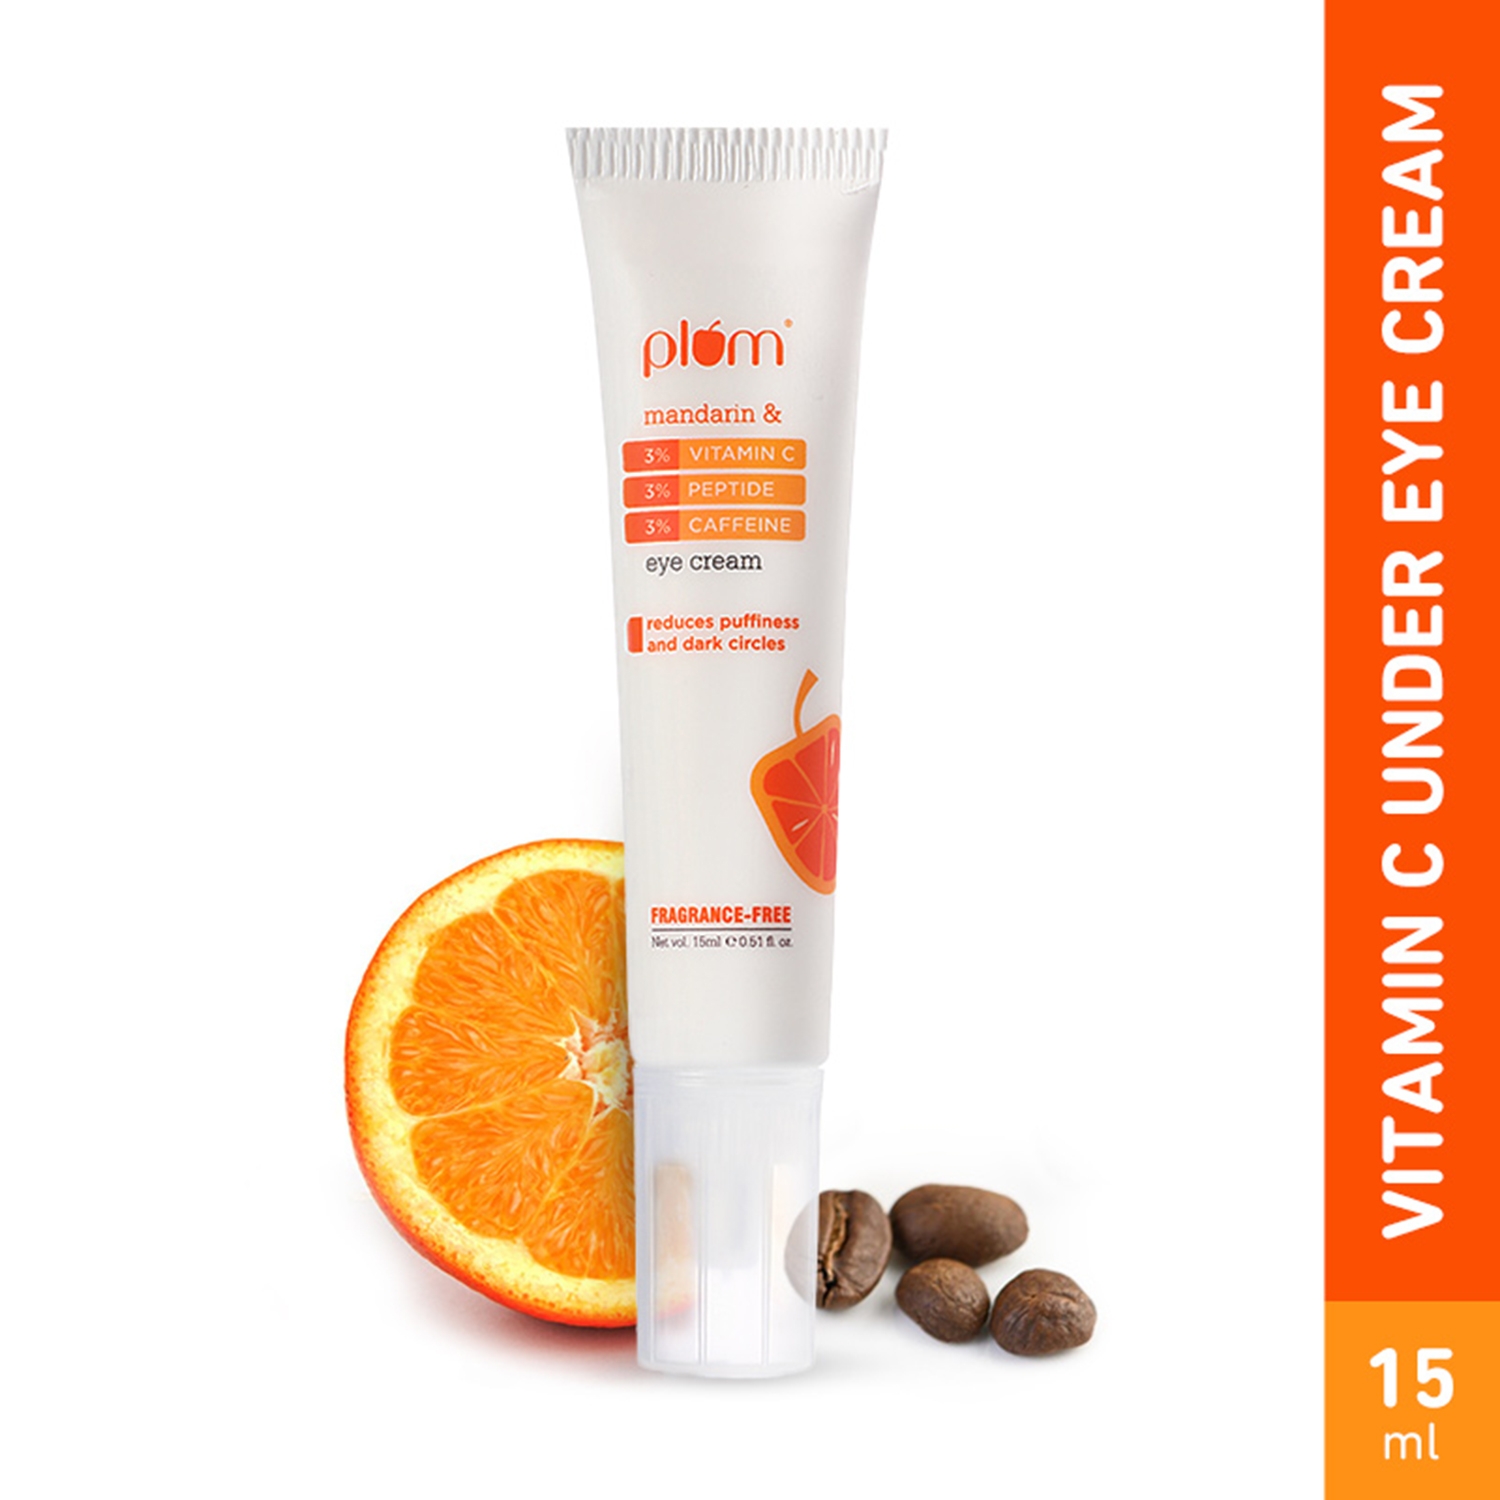 Plum Mandarin & 3% Vitamin C 3% Peptide 3% Caffeine Eye Cream, boost glow, reduces dark circle (15g)